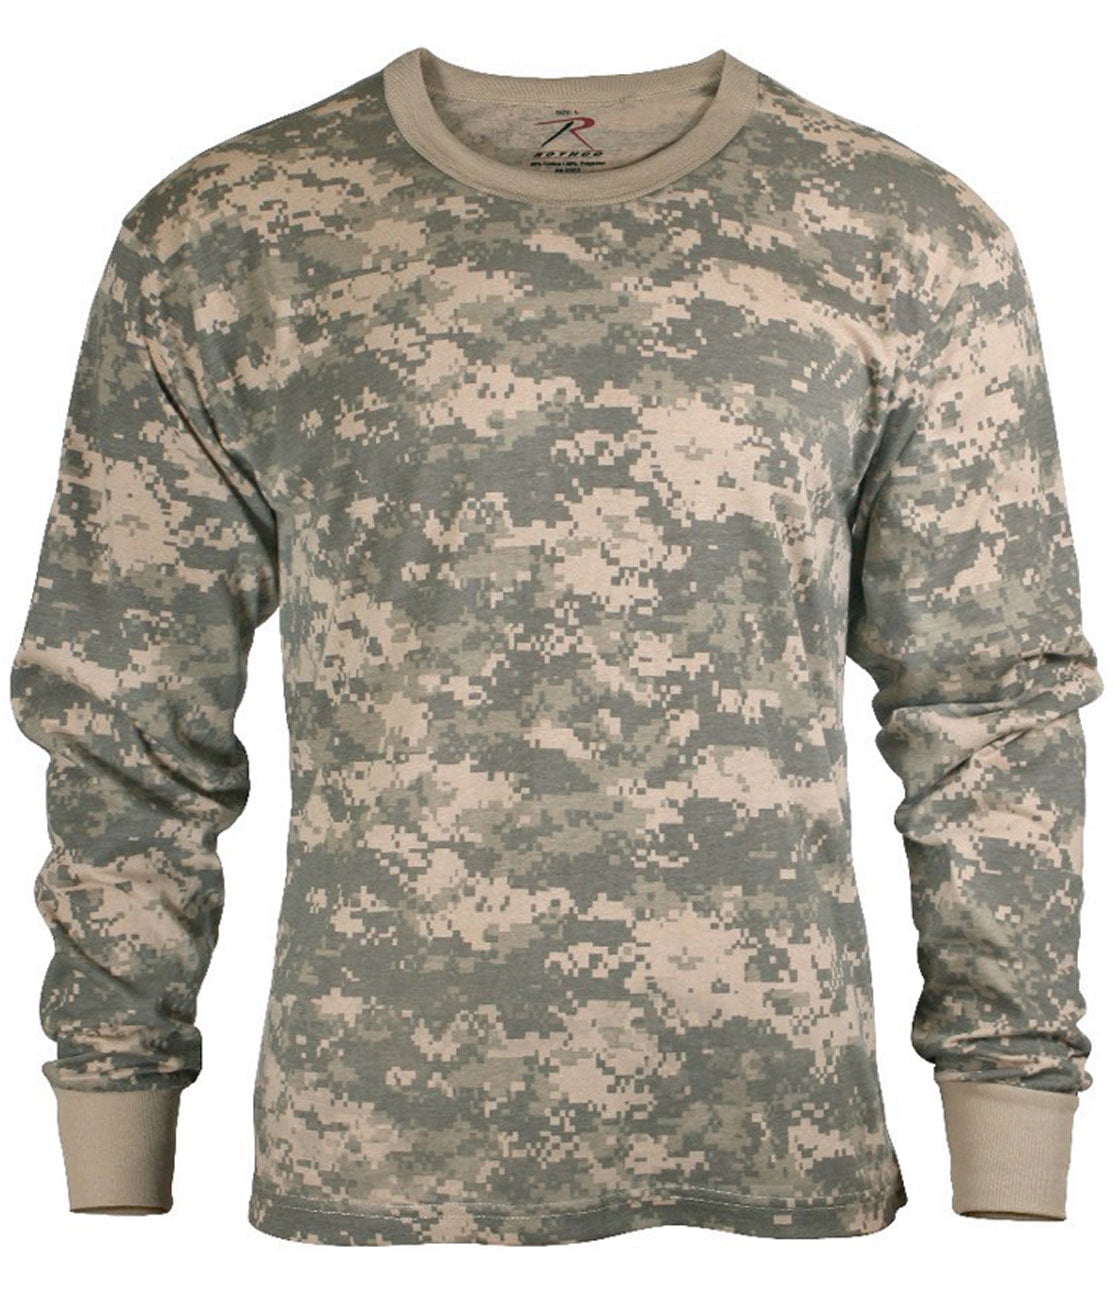 Smokey Branch Camouflage Long Sleeve T-Shirt Tactical Military Shirt Rothco 6770 